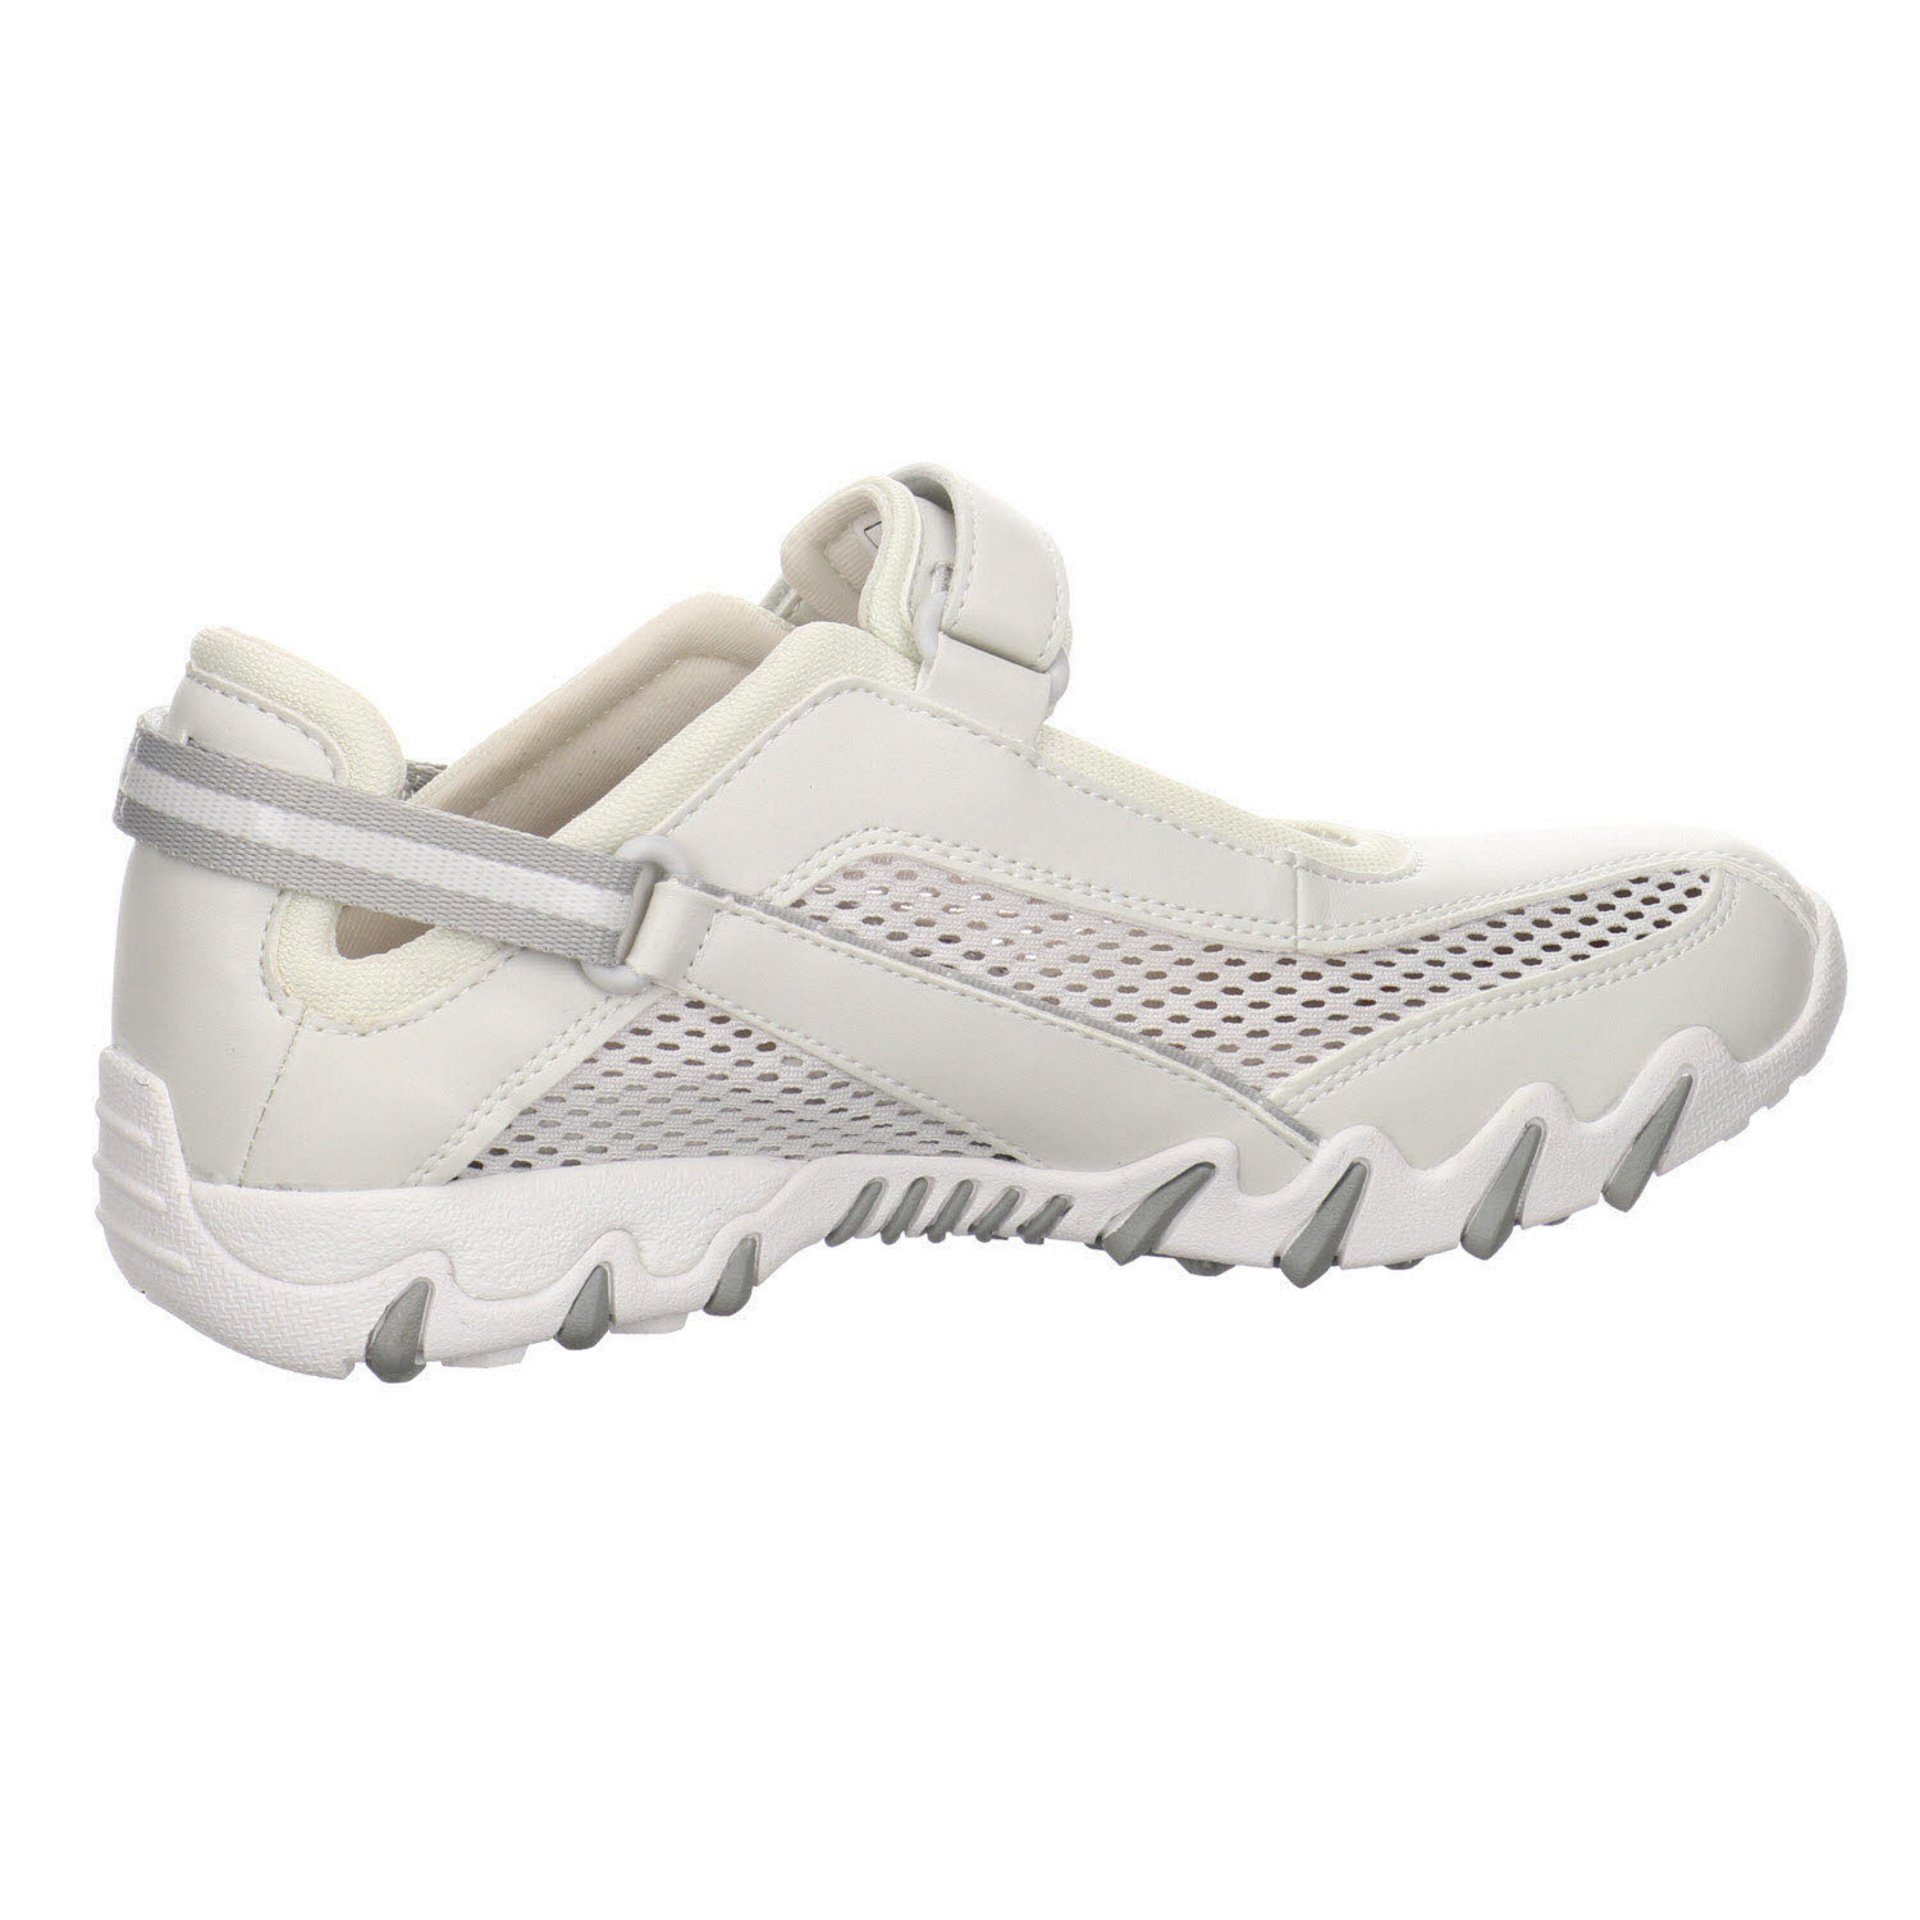 Mephisto Allrounder Damen Schuhe CLOU Outdoorschuh Outdoor Niro Leder-/Textilkombination OFFWHITE/NIMBUS Outdoorschuh